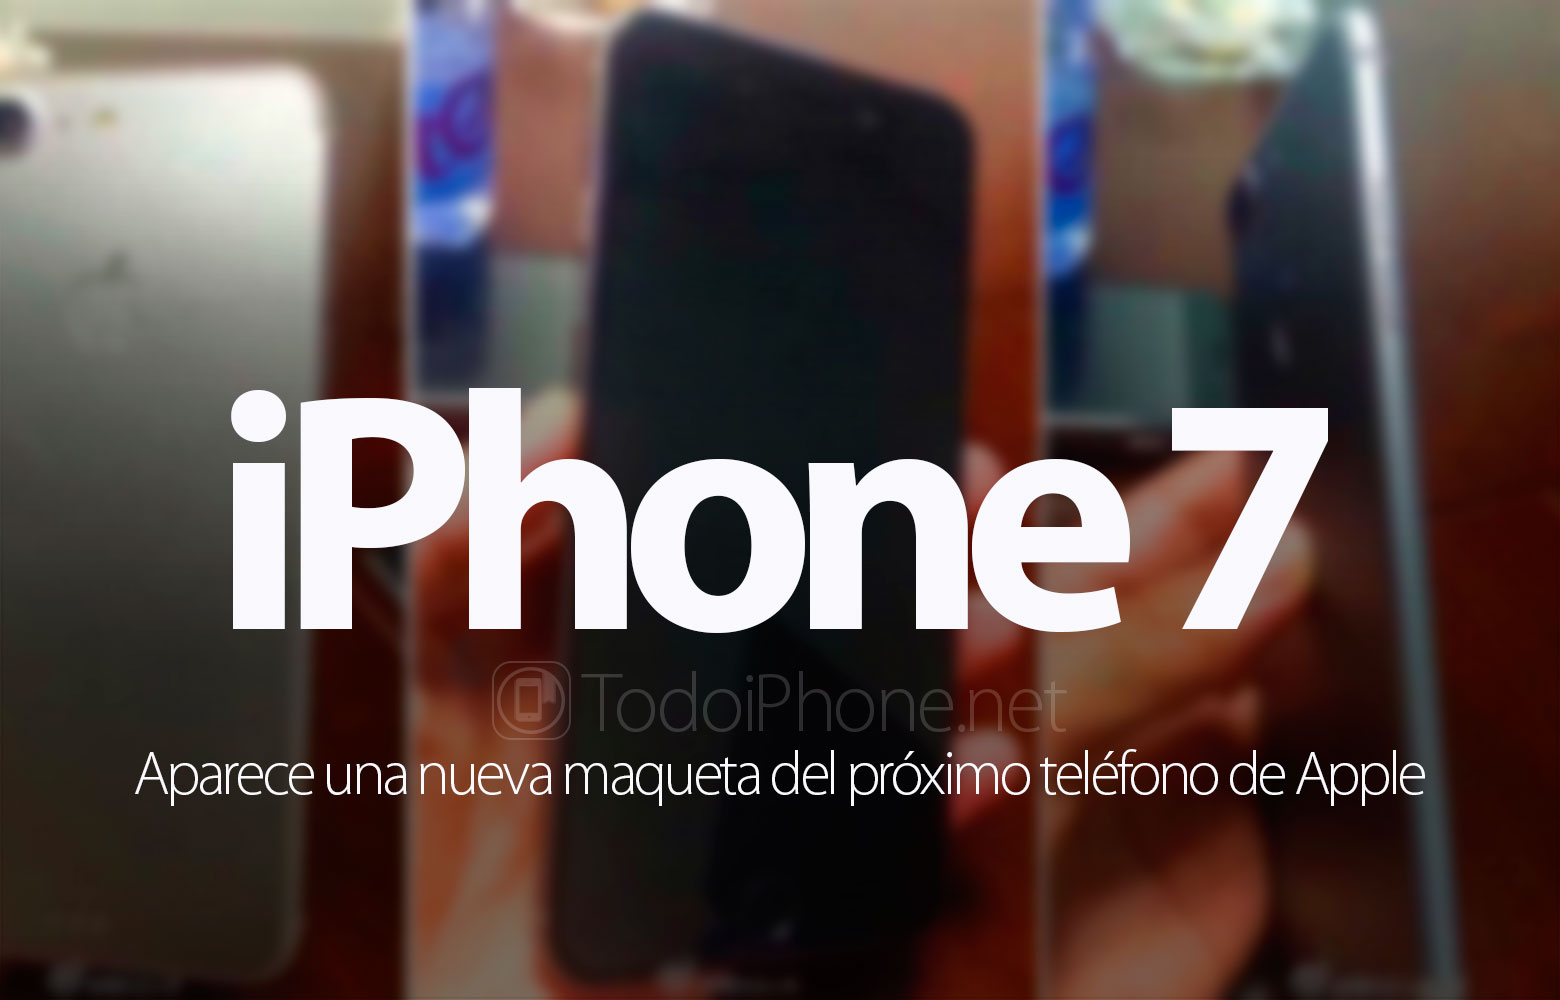 iphone-7-maqueta-proximo-telefono-apple